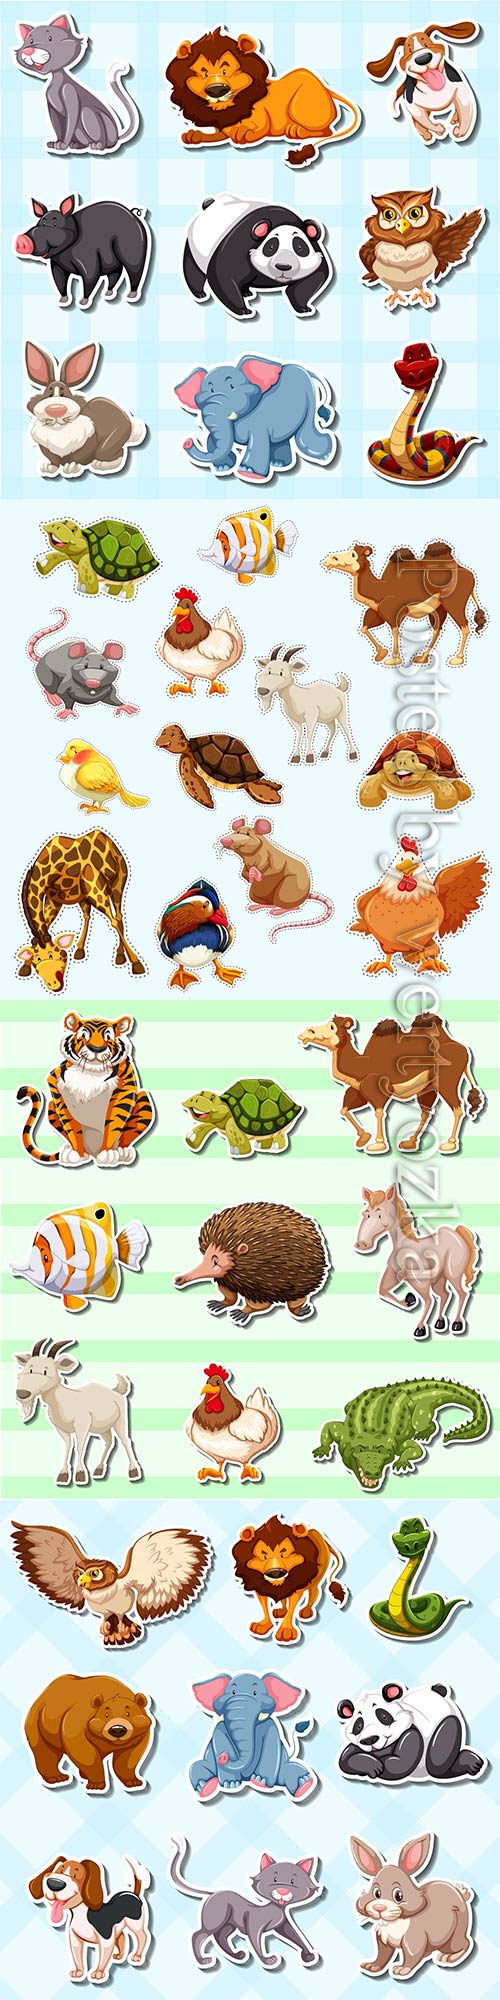 Sticker set with cute animals # 3